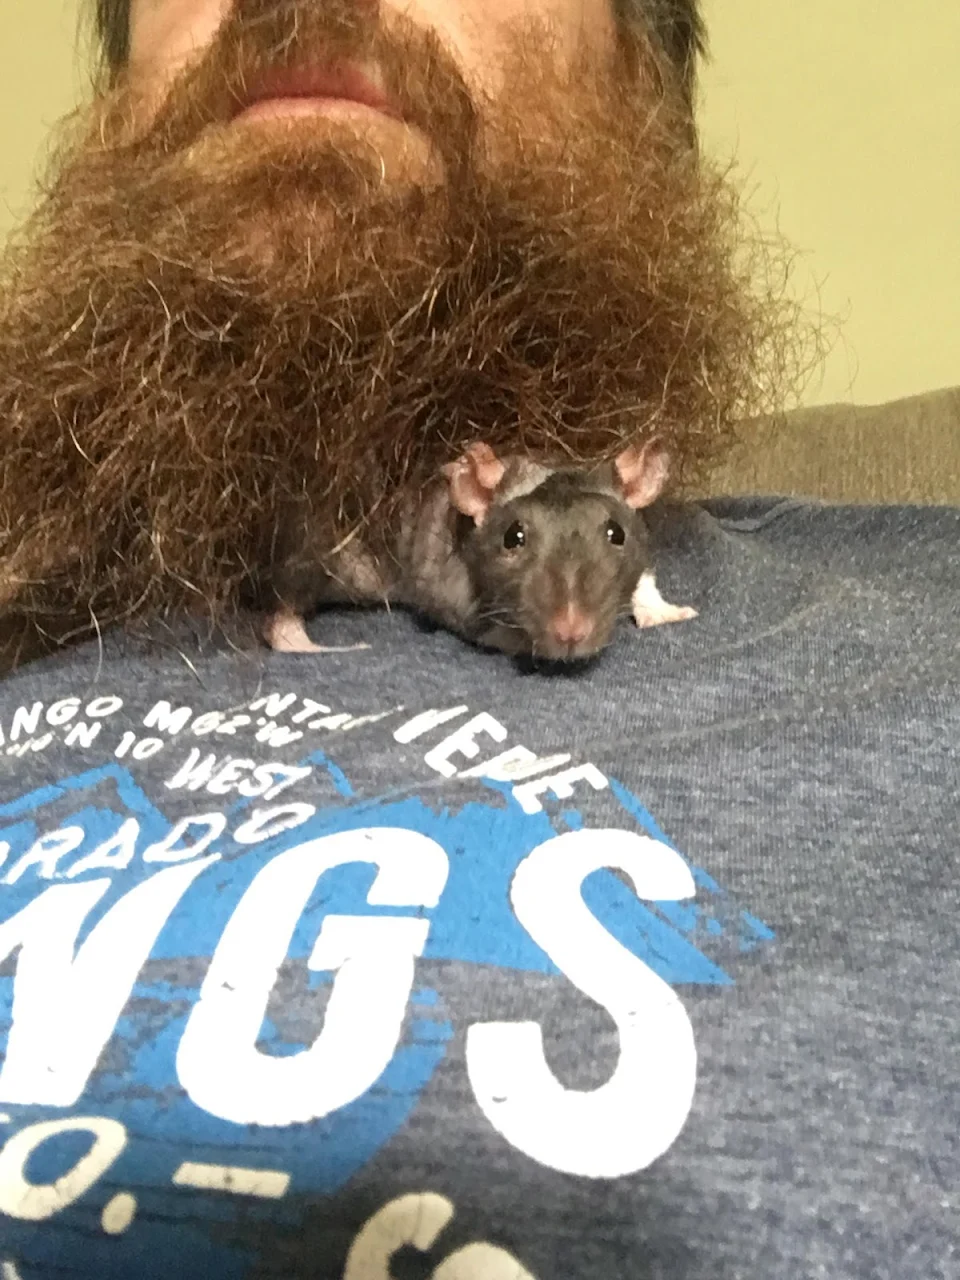 My pet rat, Master Splinter, likes hiding in my beard.